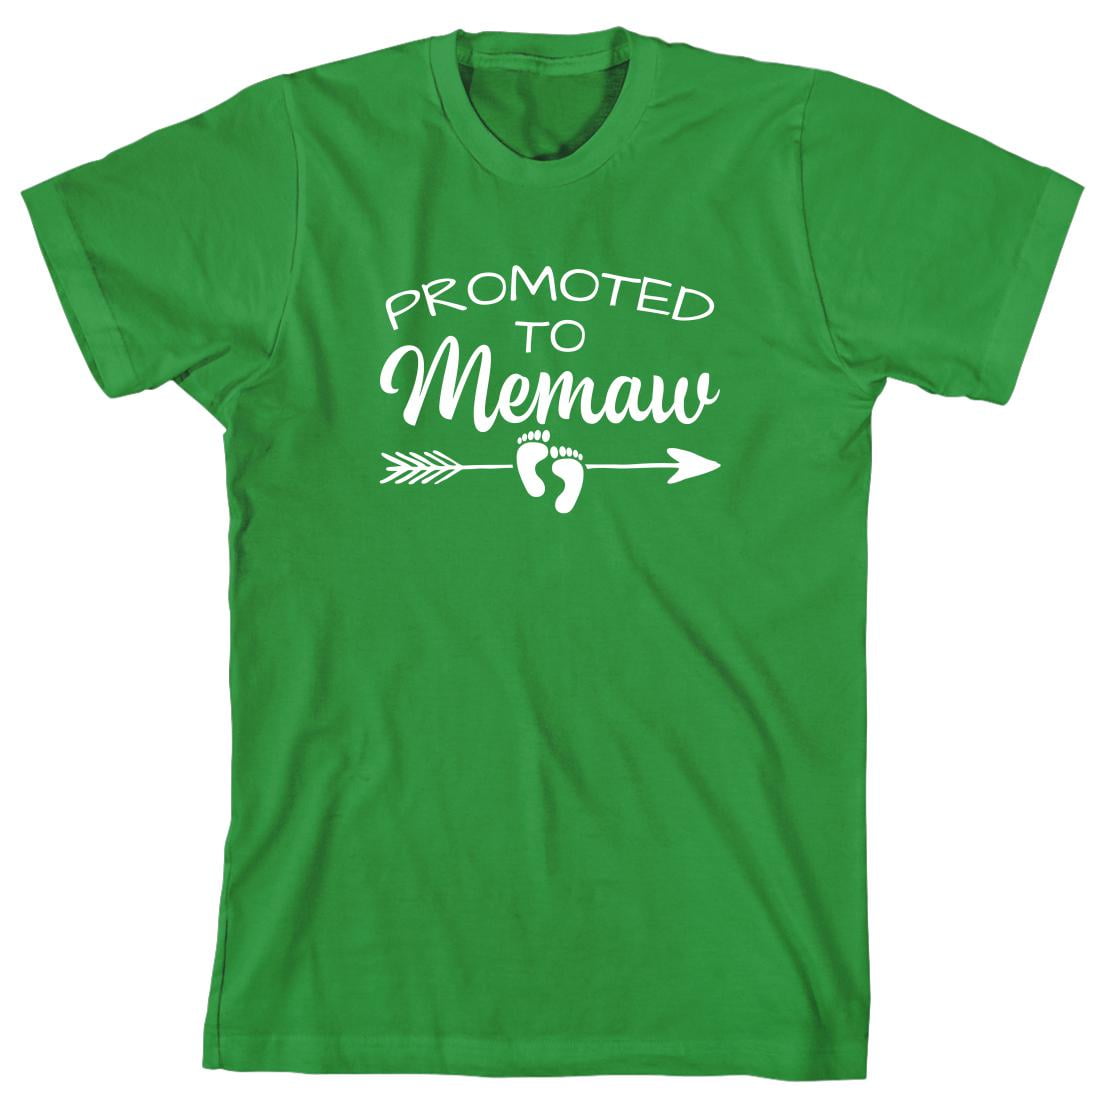 Promoted To Memaw Men's Shirt - ID: 2024 - Walmart.com